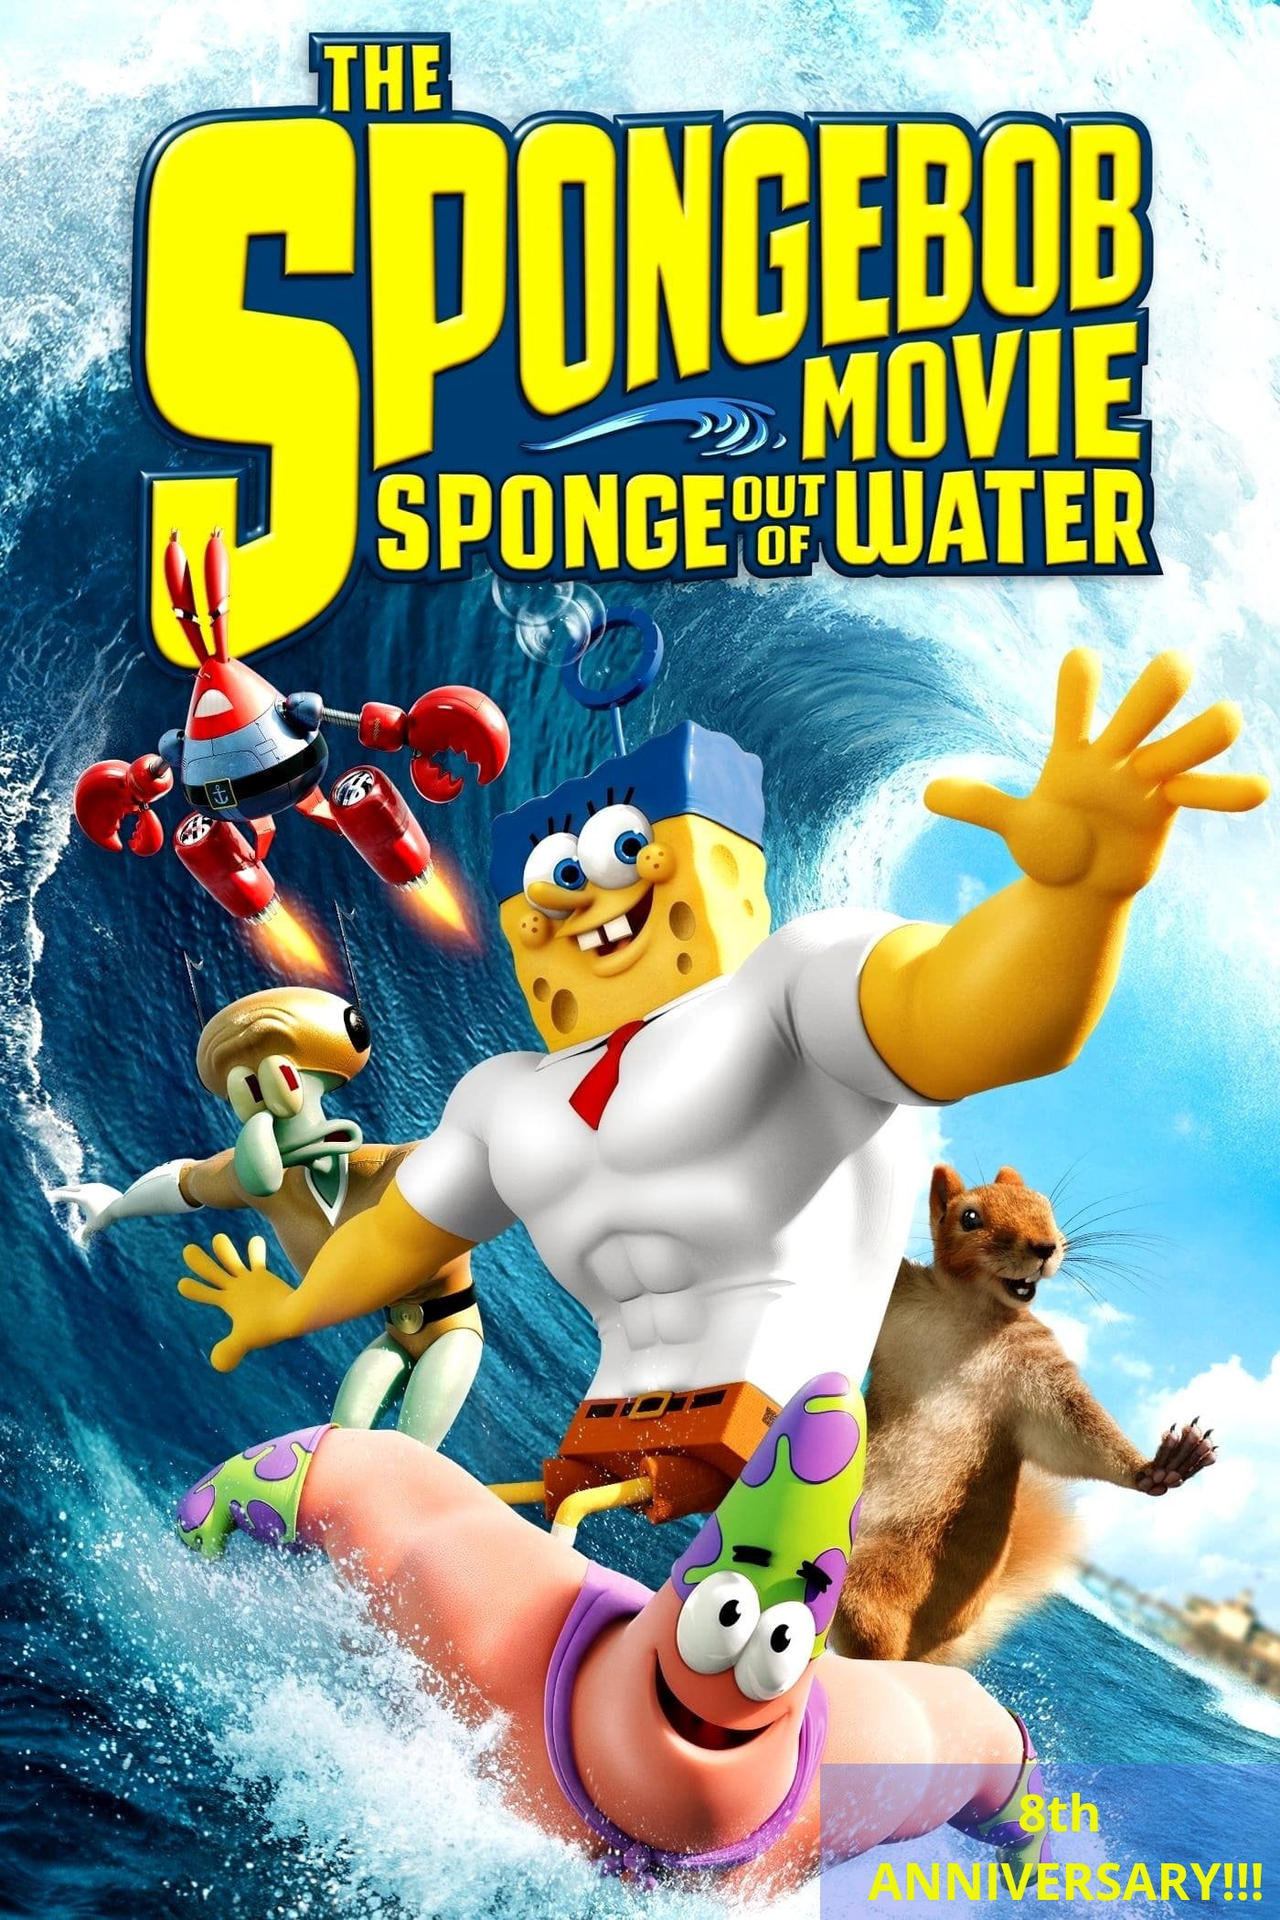 The SpongeBob MOVIE: SPONGE OUT OF WATER [8 YEARS] by MYLEY6 on DeviantArt